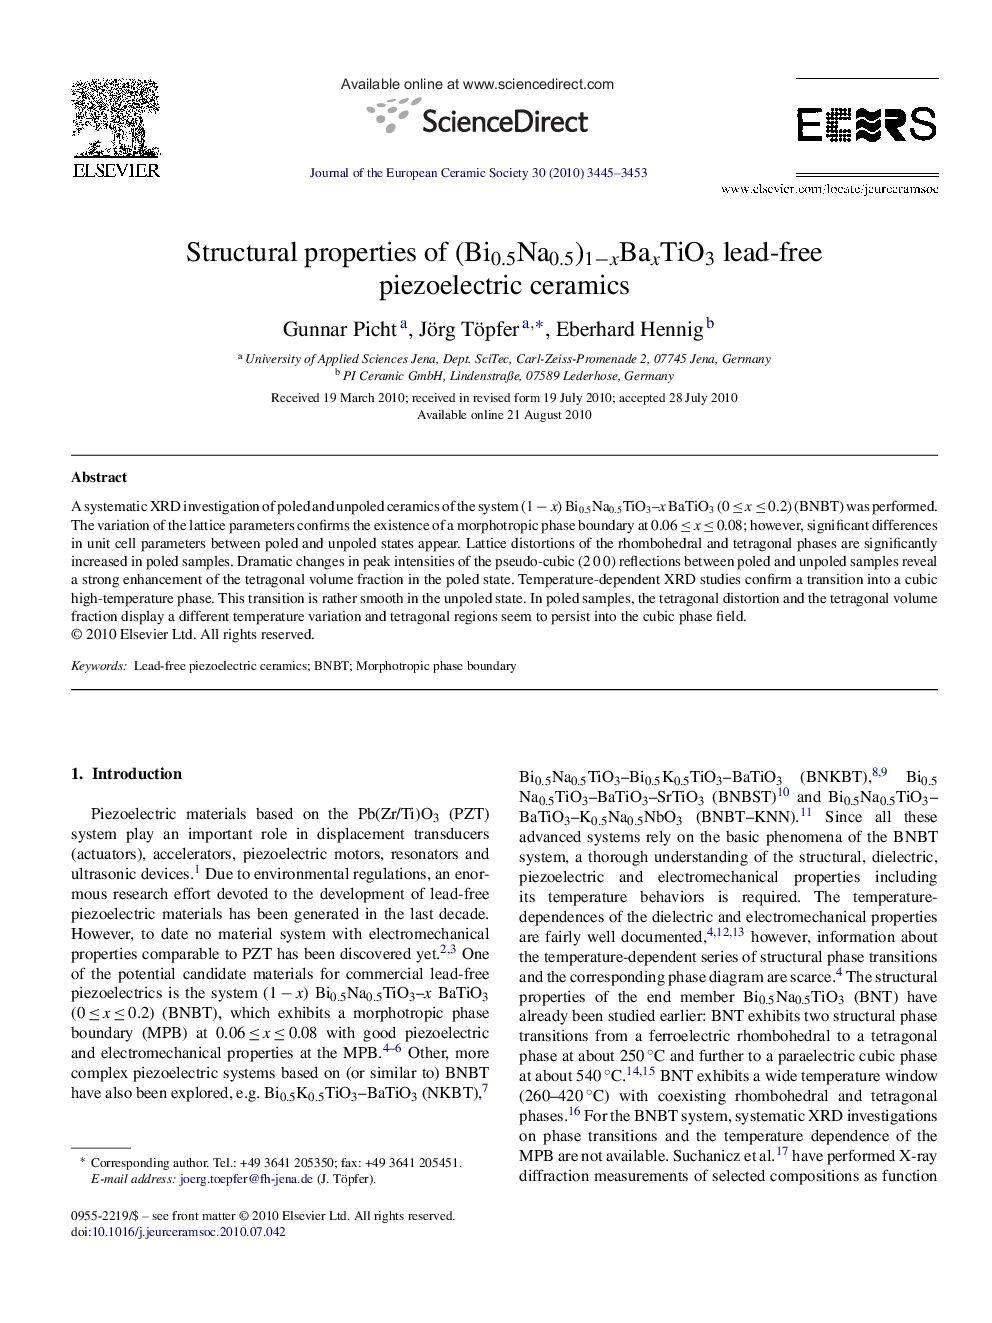 Structural properties of (Bi0.5Na0.5)1−xBaxTiO3 lead-free piezoelectric ceramics